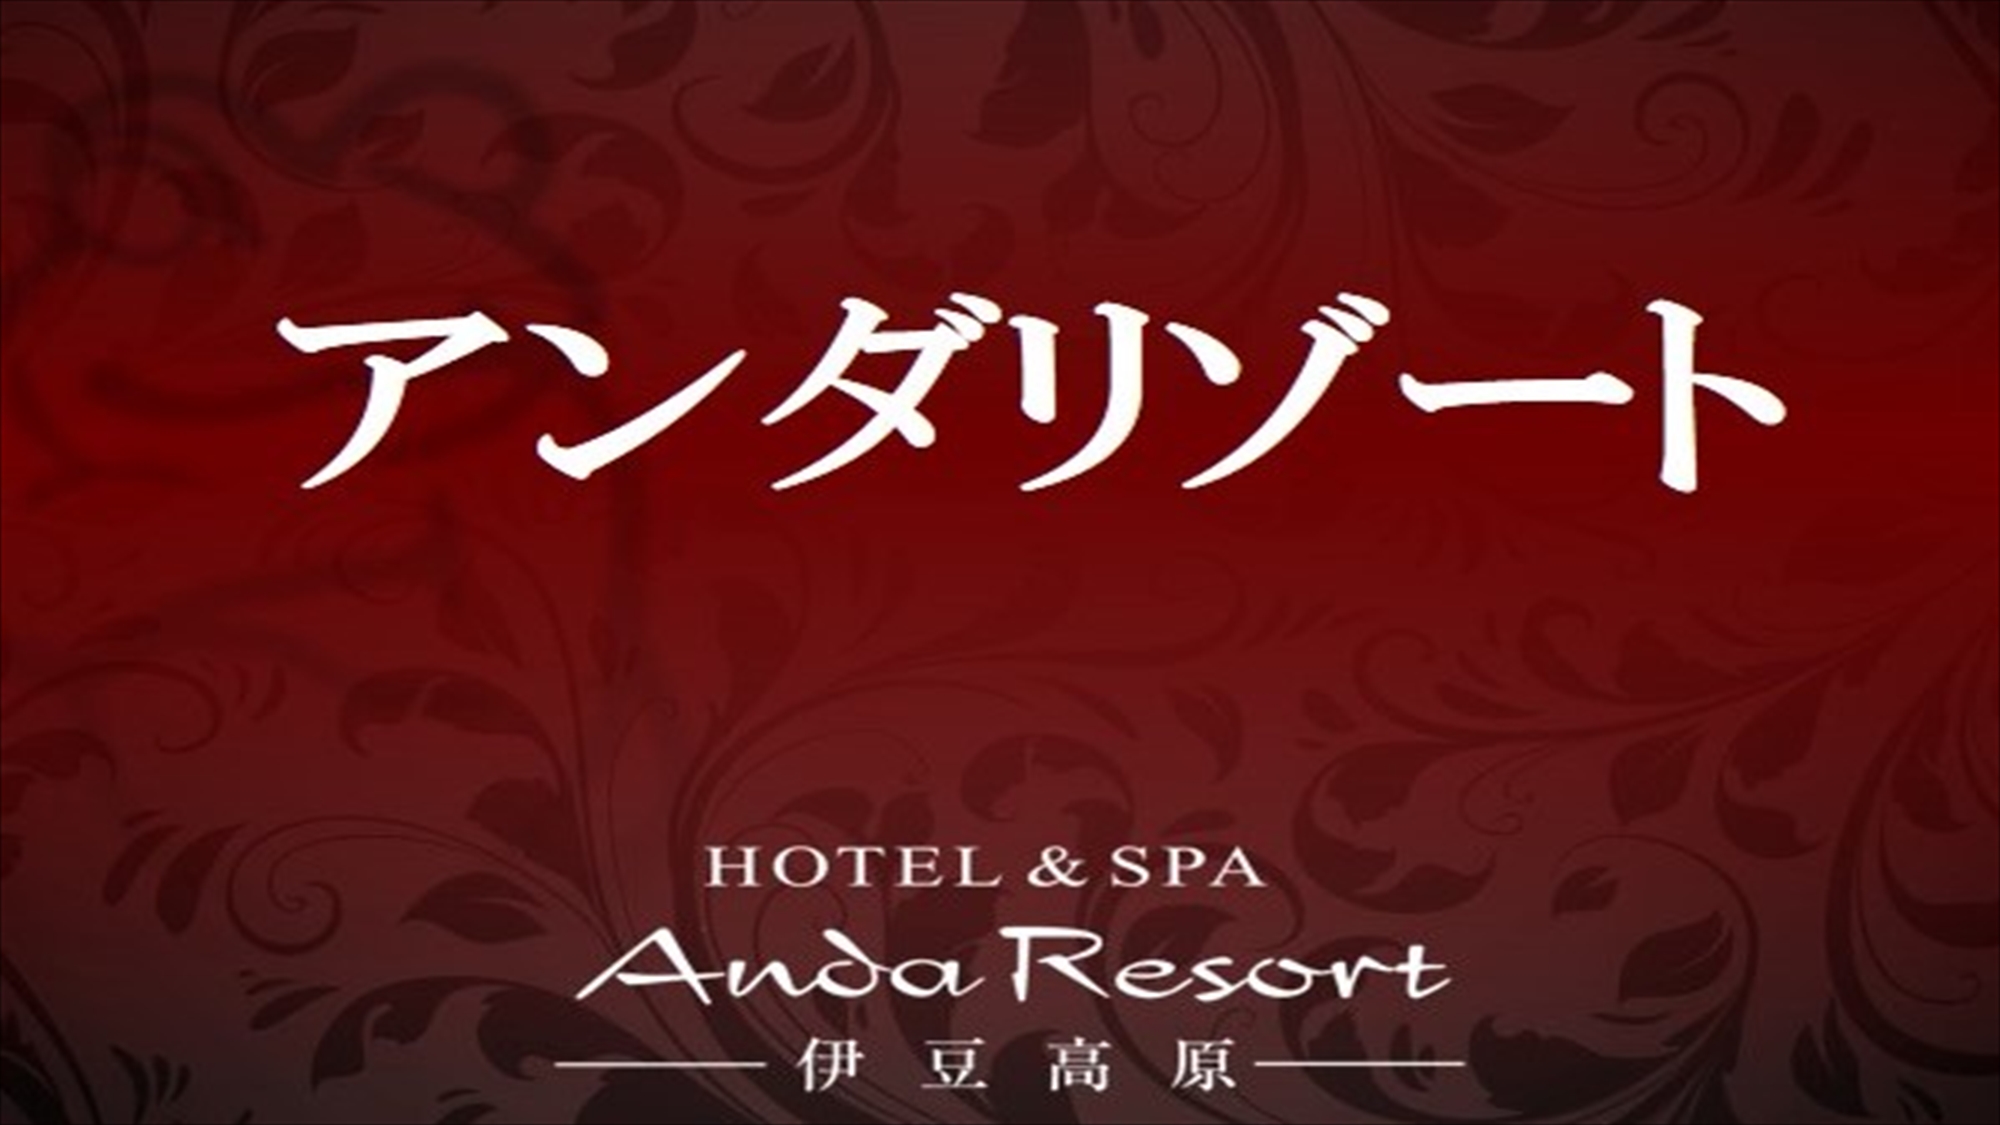 Hotel & Spa Anda Resort Izukogen